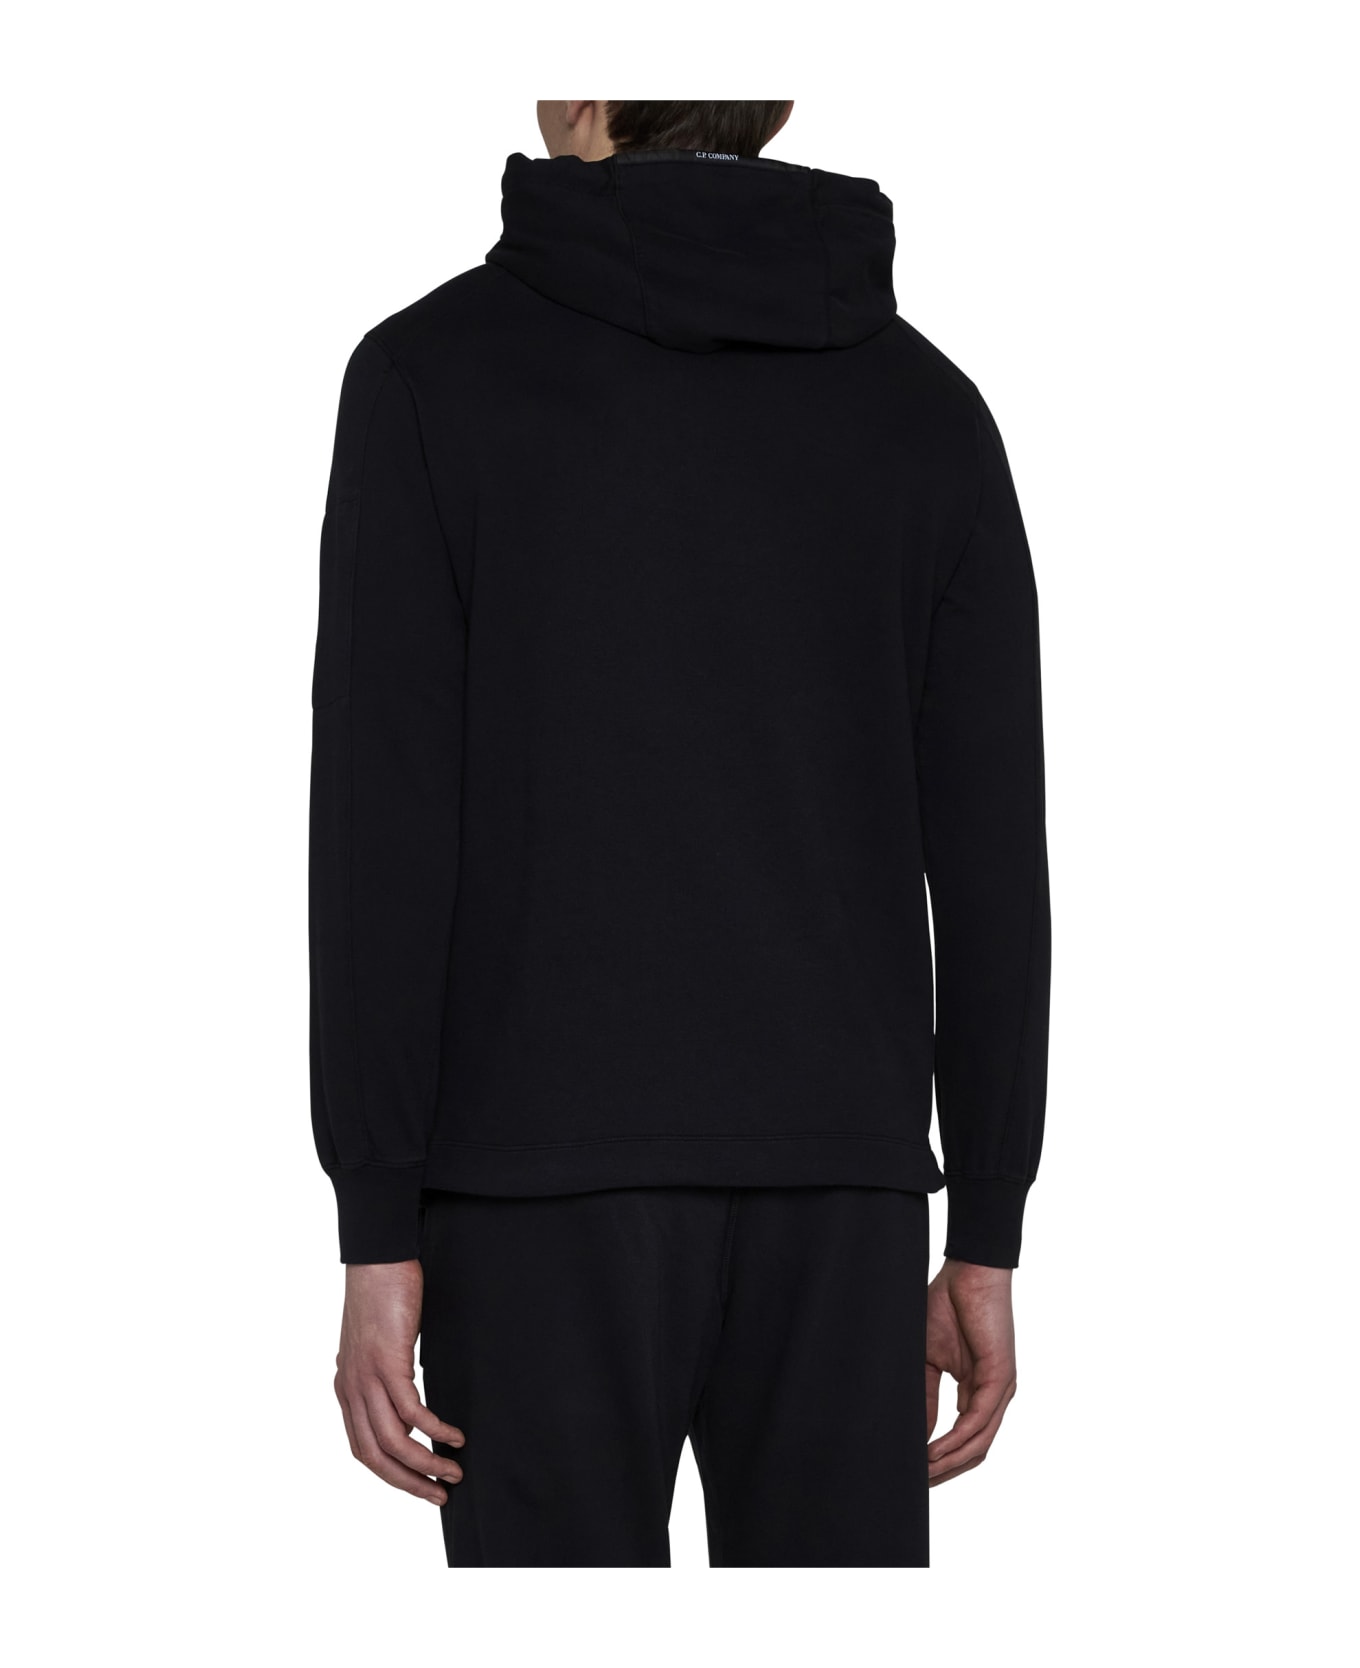 C.P. Company Light Fleece Hooded Sweatshirt - Black フリース